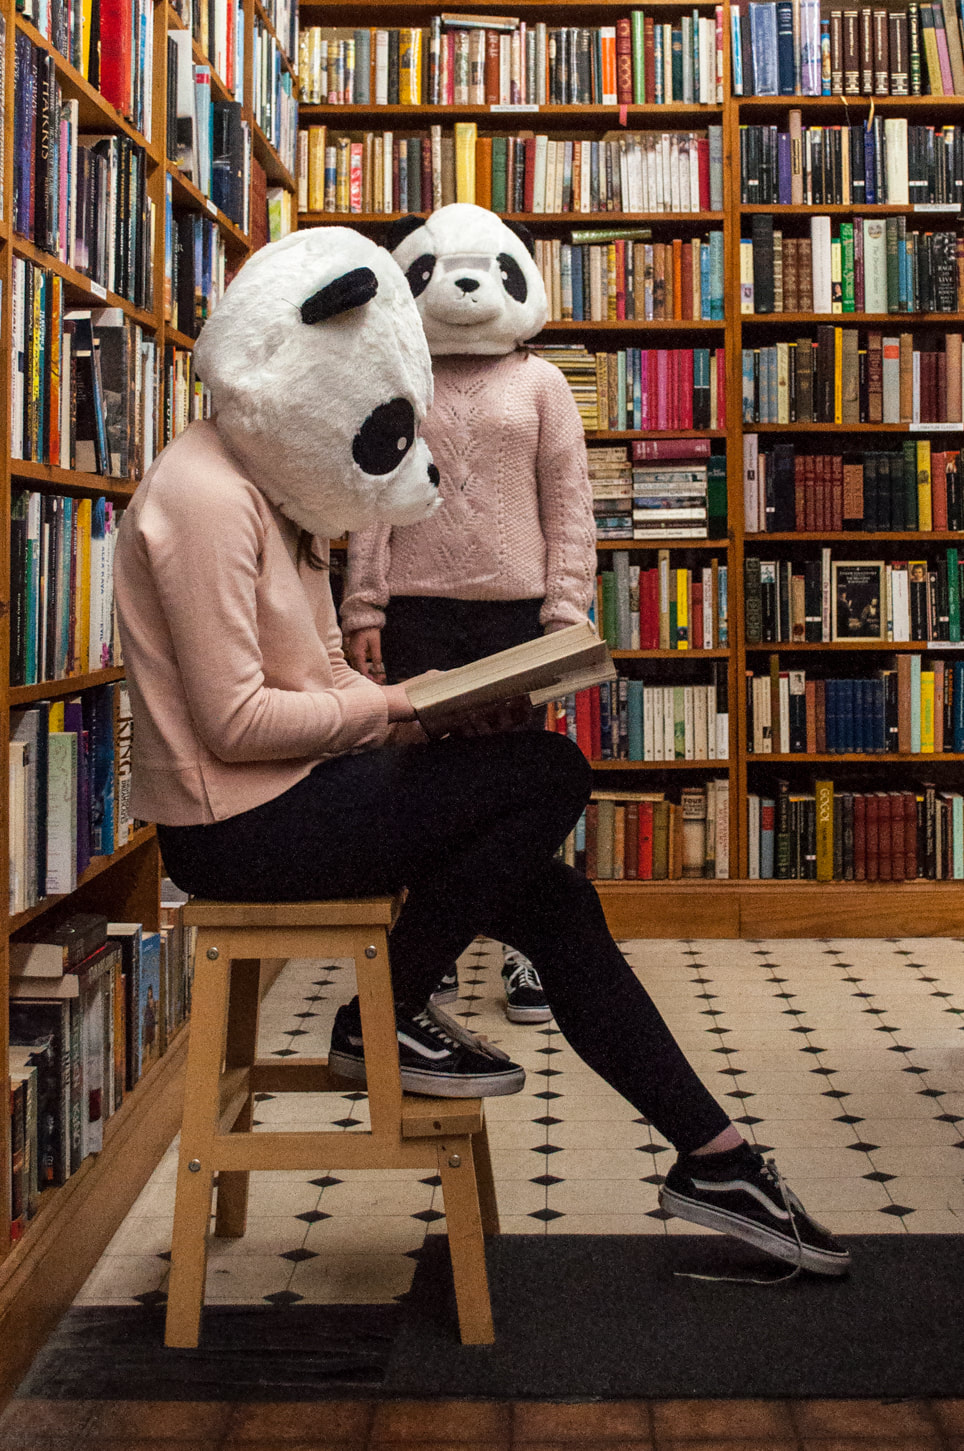 Pandas in a book store